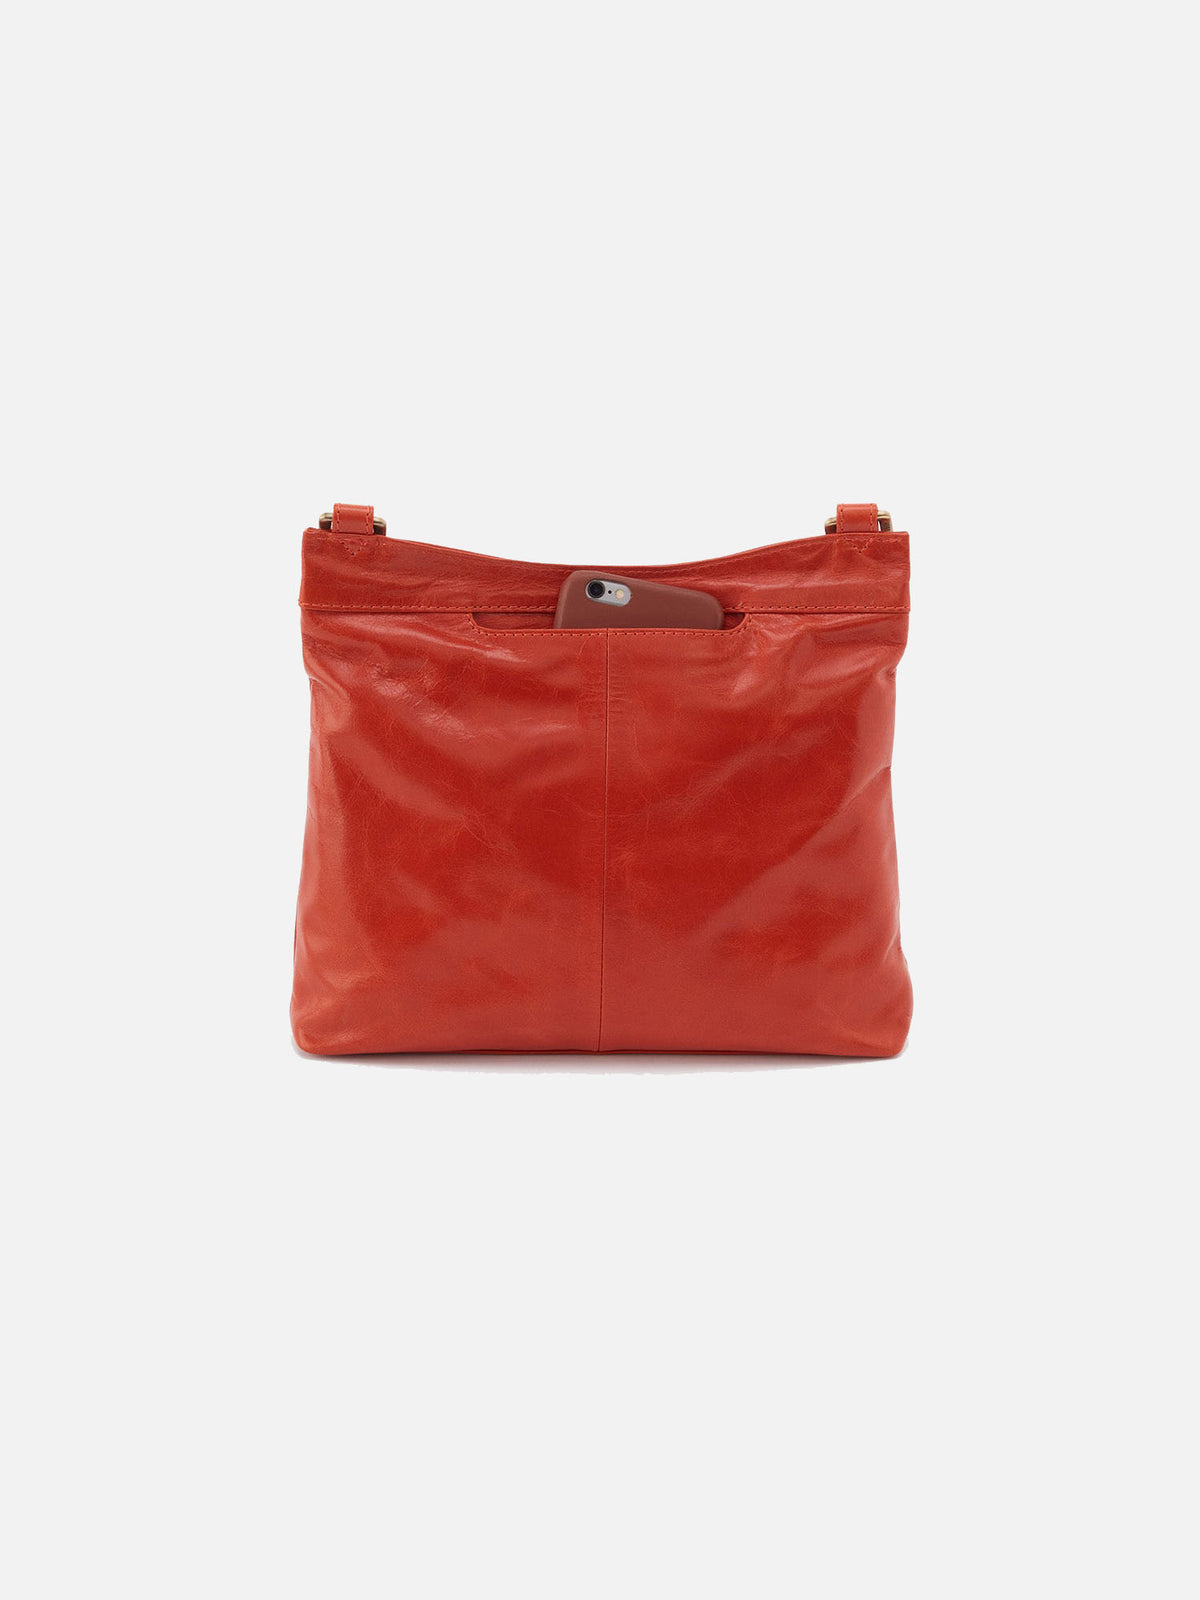 hobo cambel crossbody bag in marigold polished leather